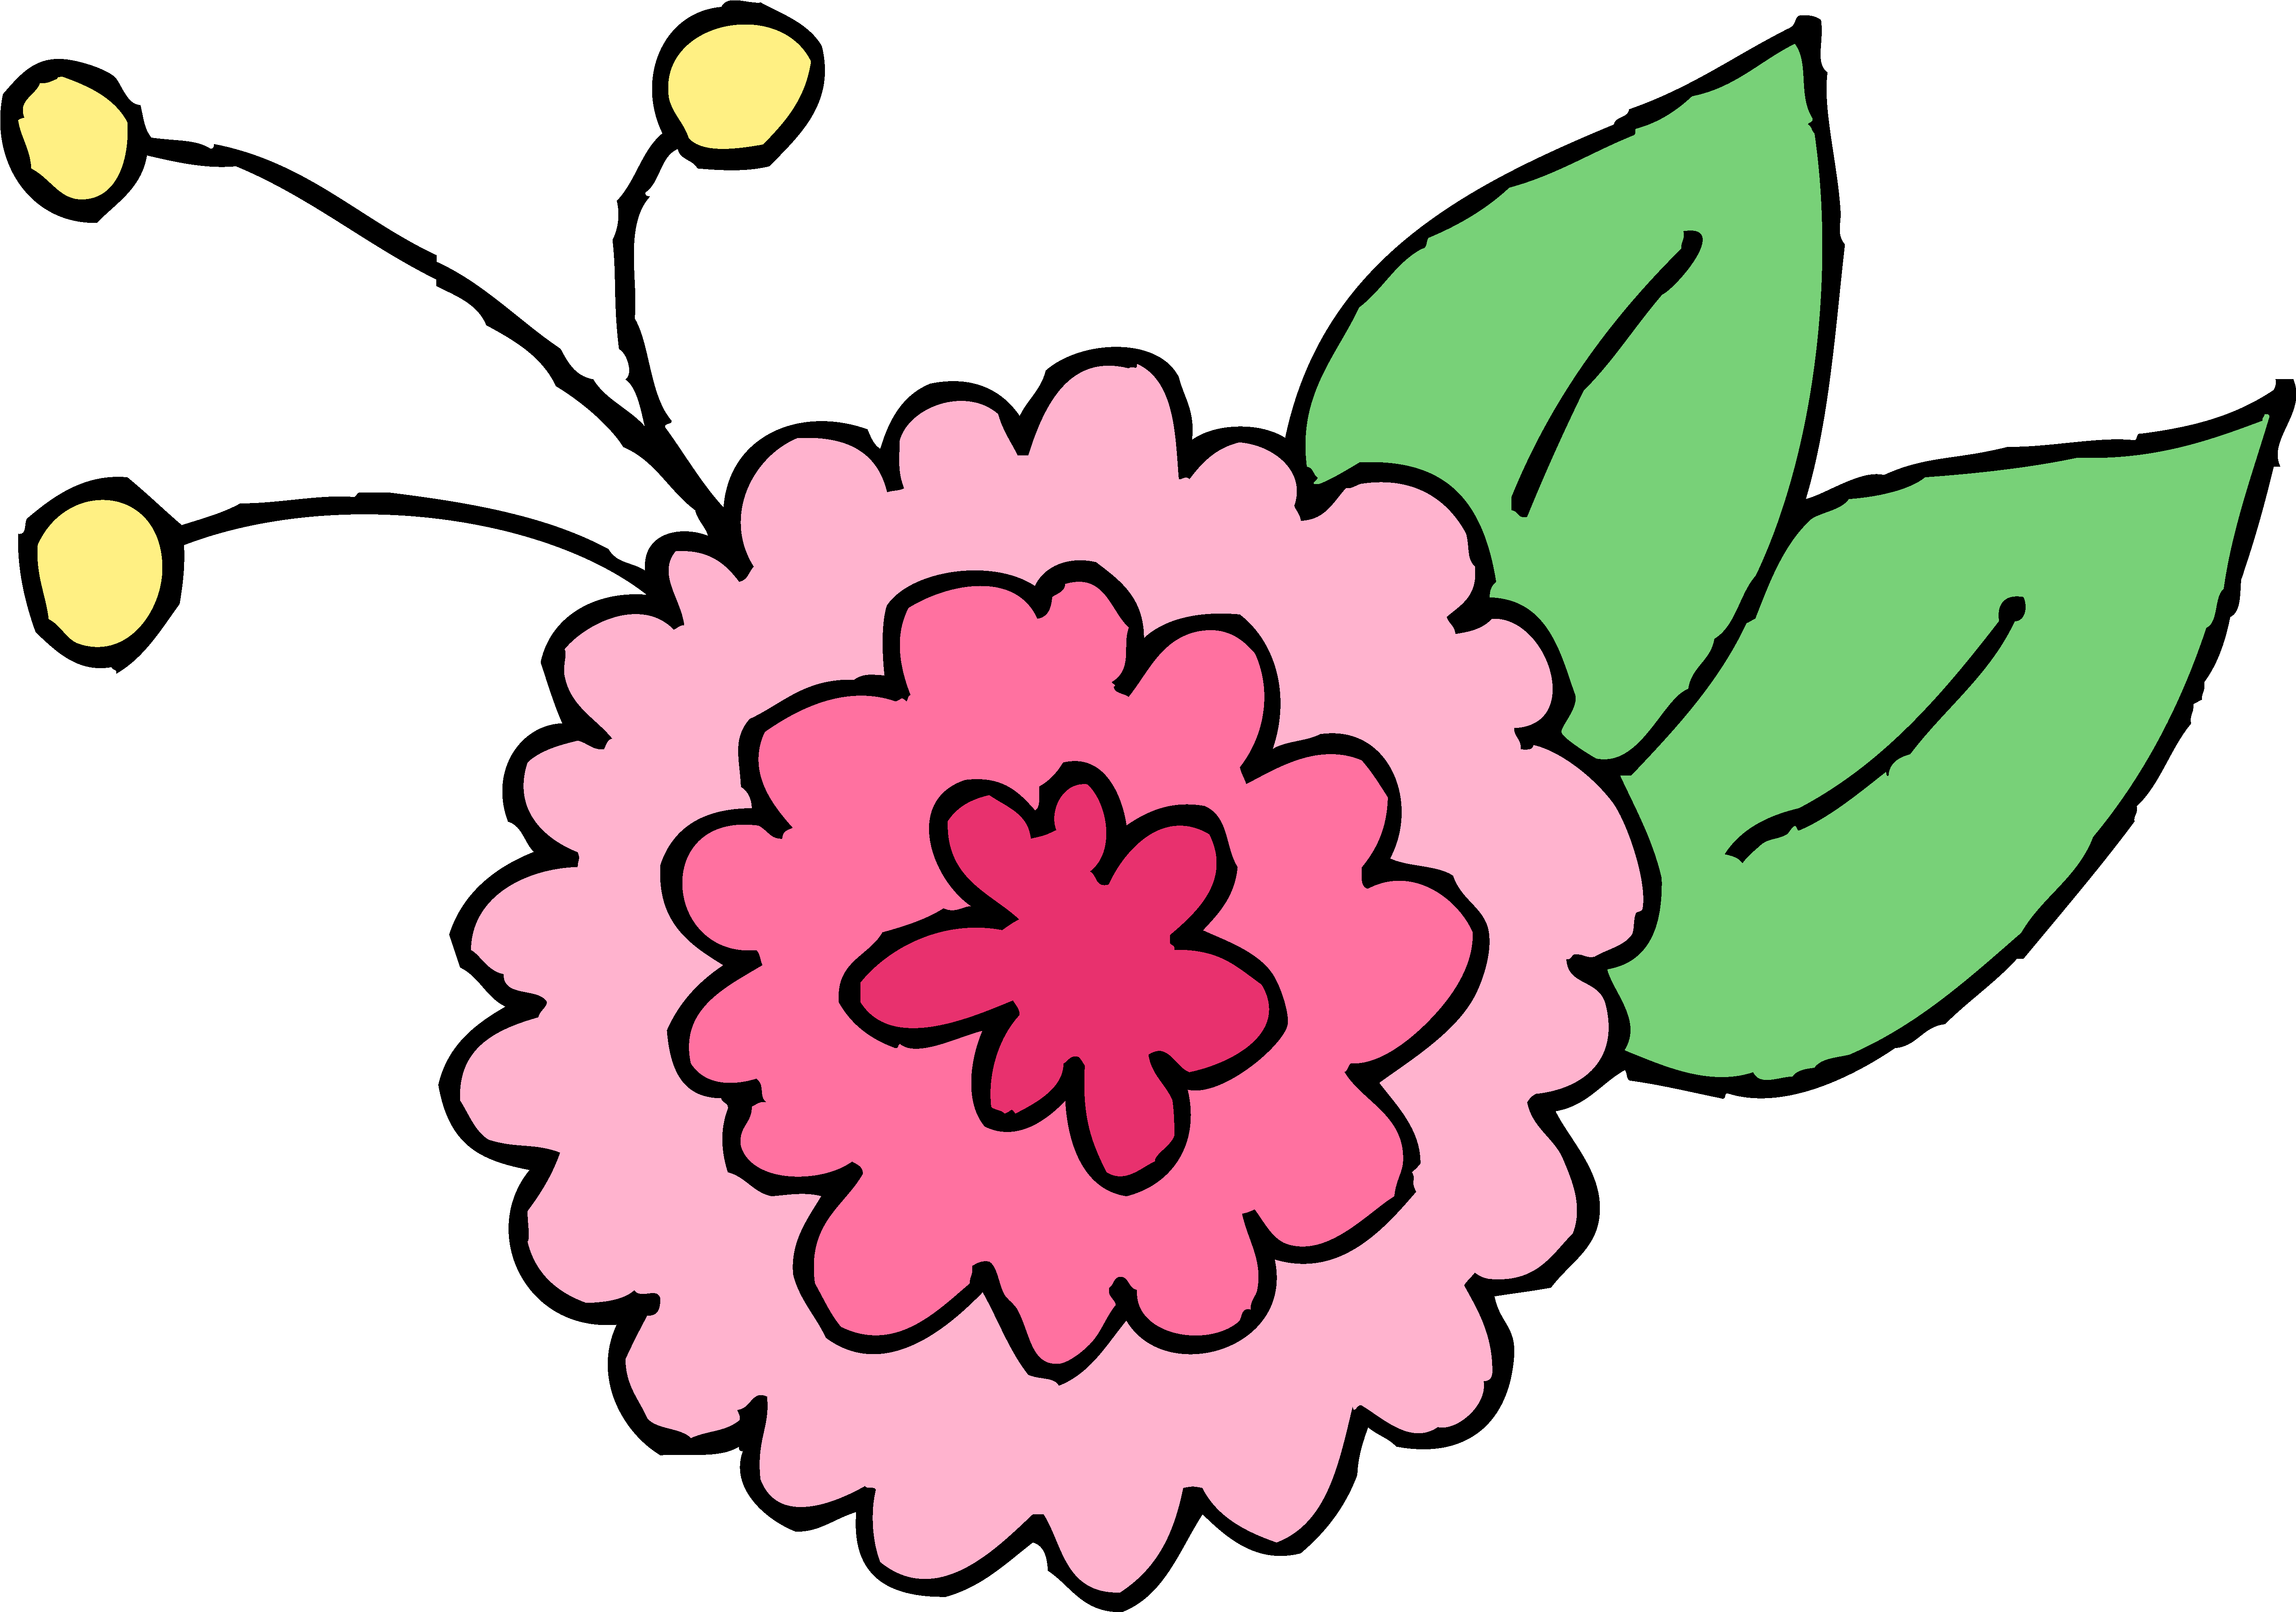 Chrysantheme ClipArt, Cartoon Chrysantheme